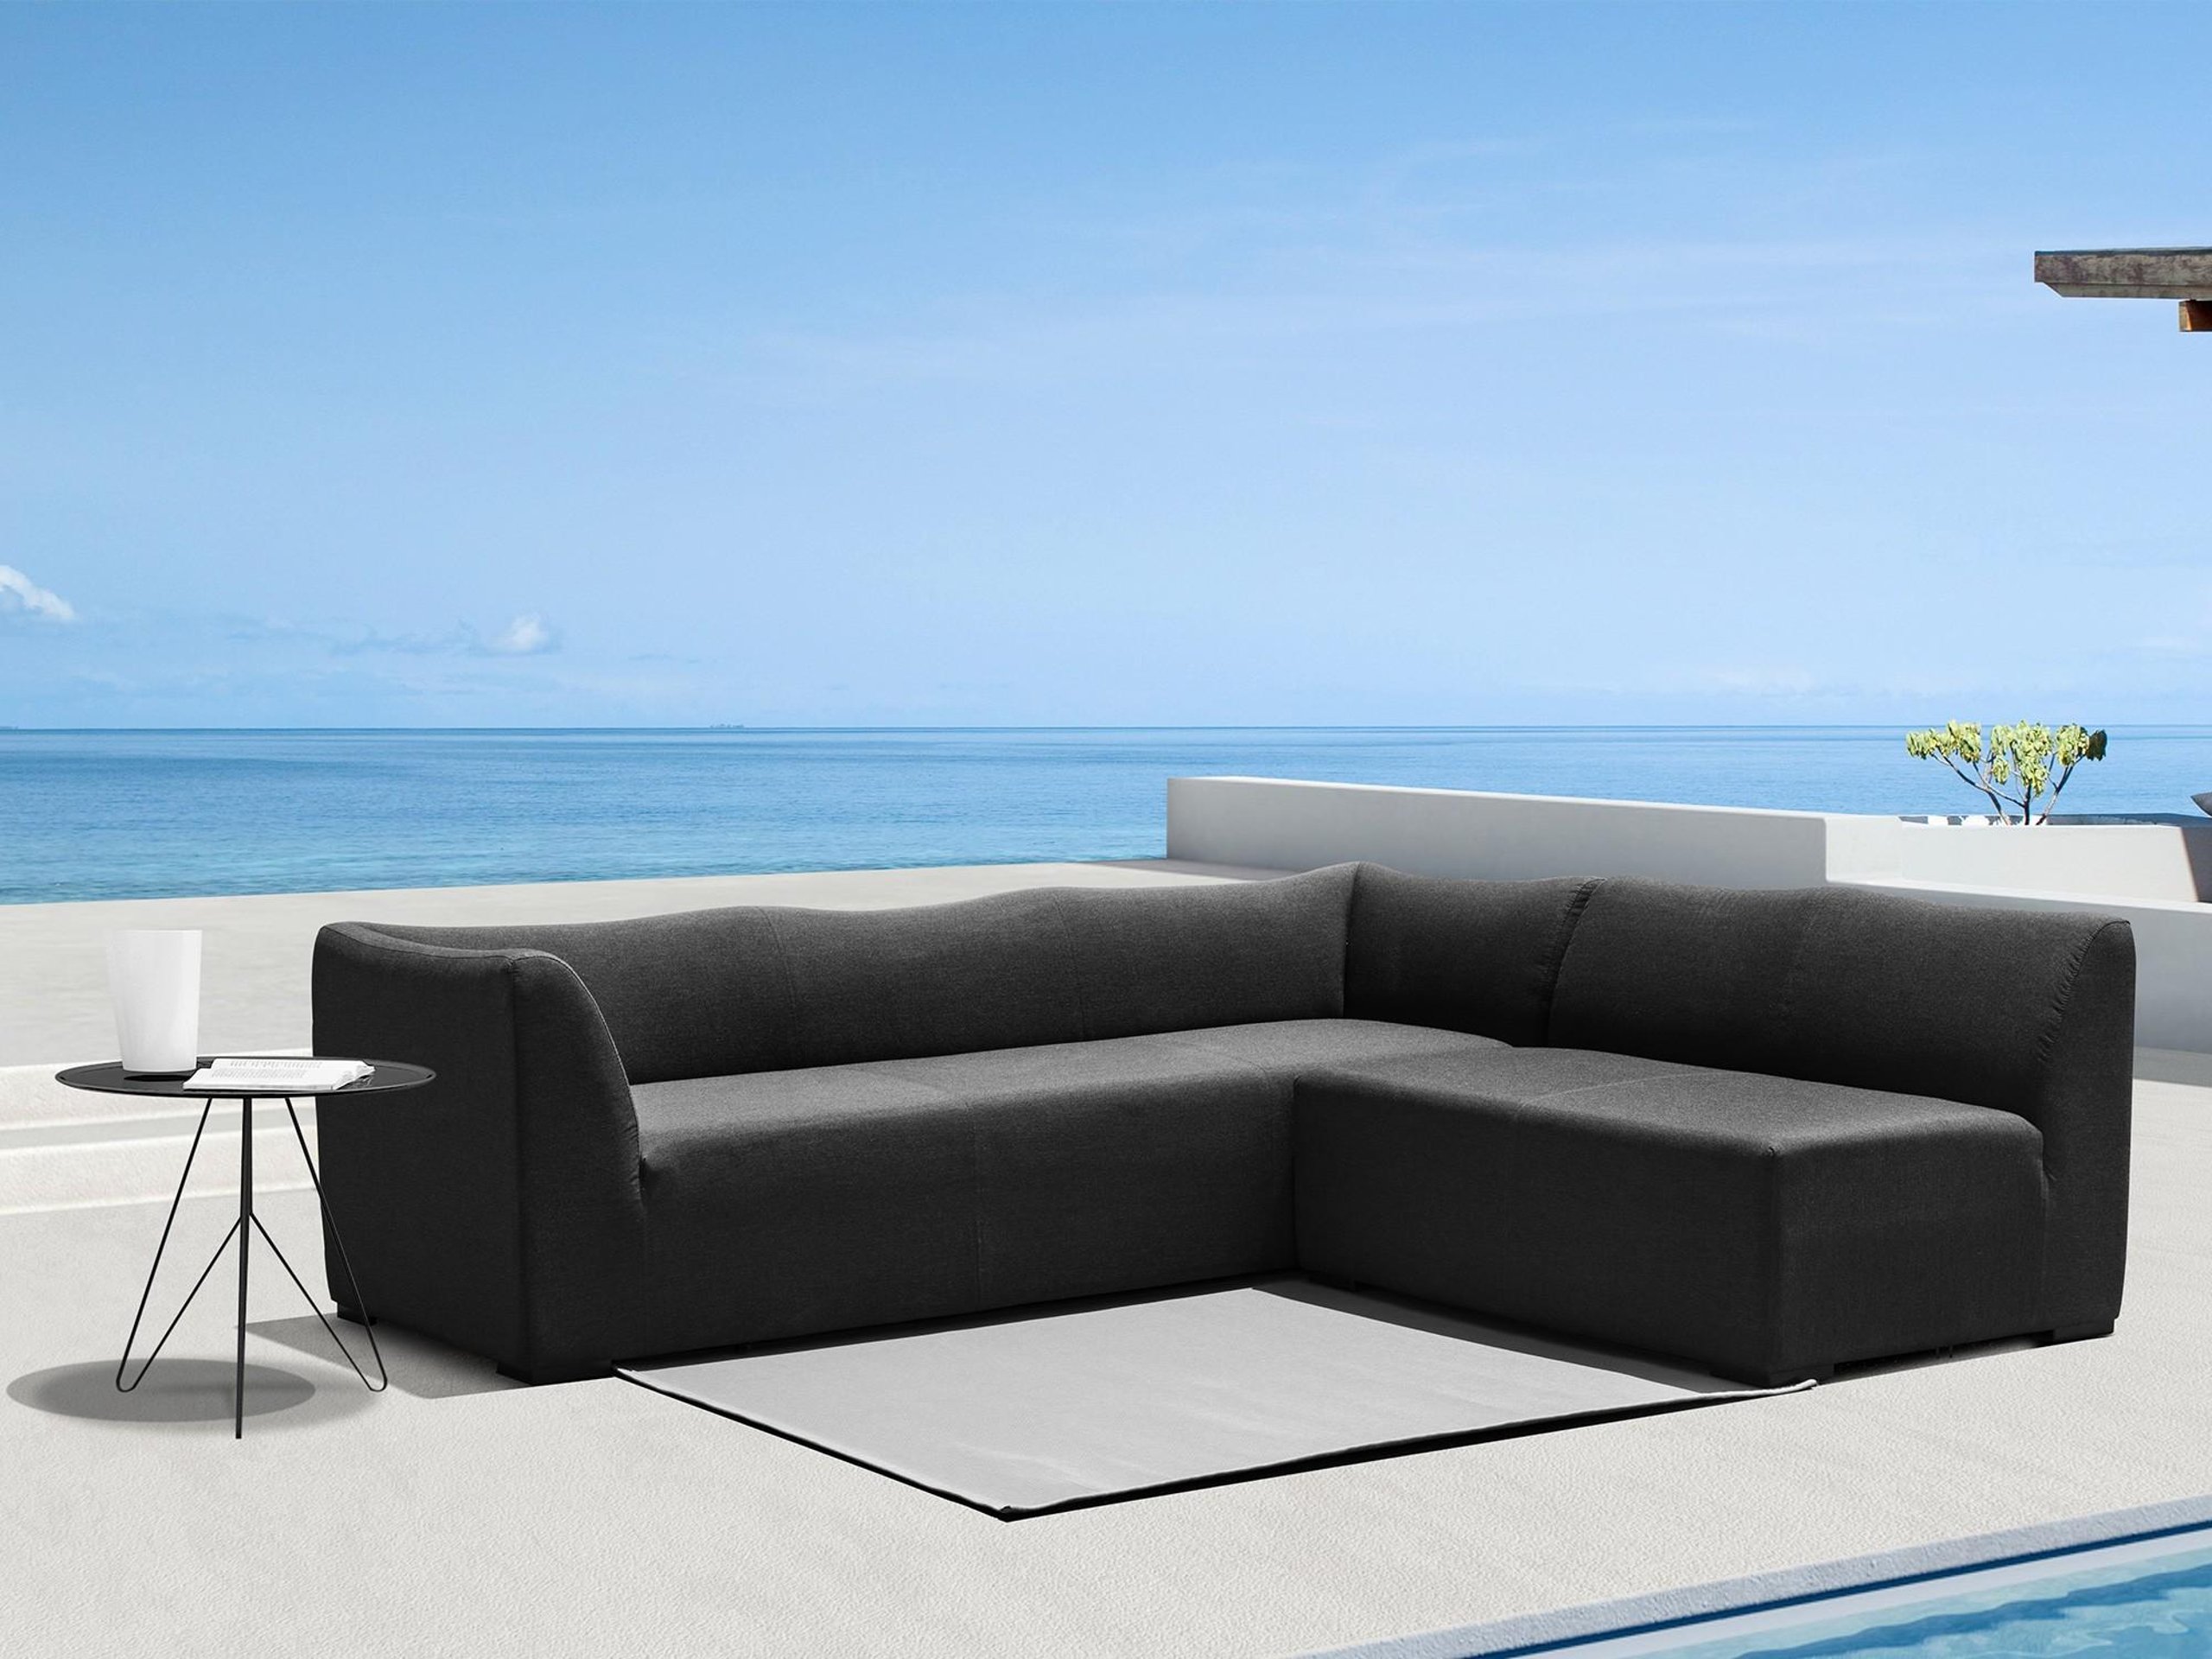 Defilé Atlantische Oceaan Landelijk Outdoor Sofa & Loveseat Set 2Pcs Dark Charcoal Sunbrella Fabric WhiteLine  Harmony – buy online on NY Furniture Outlet